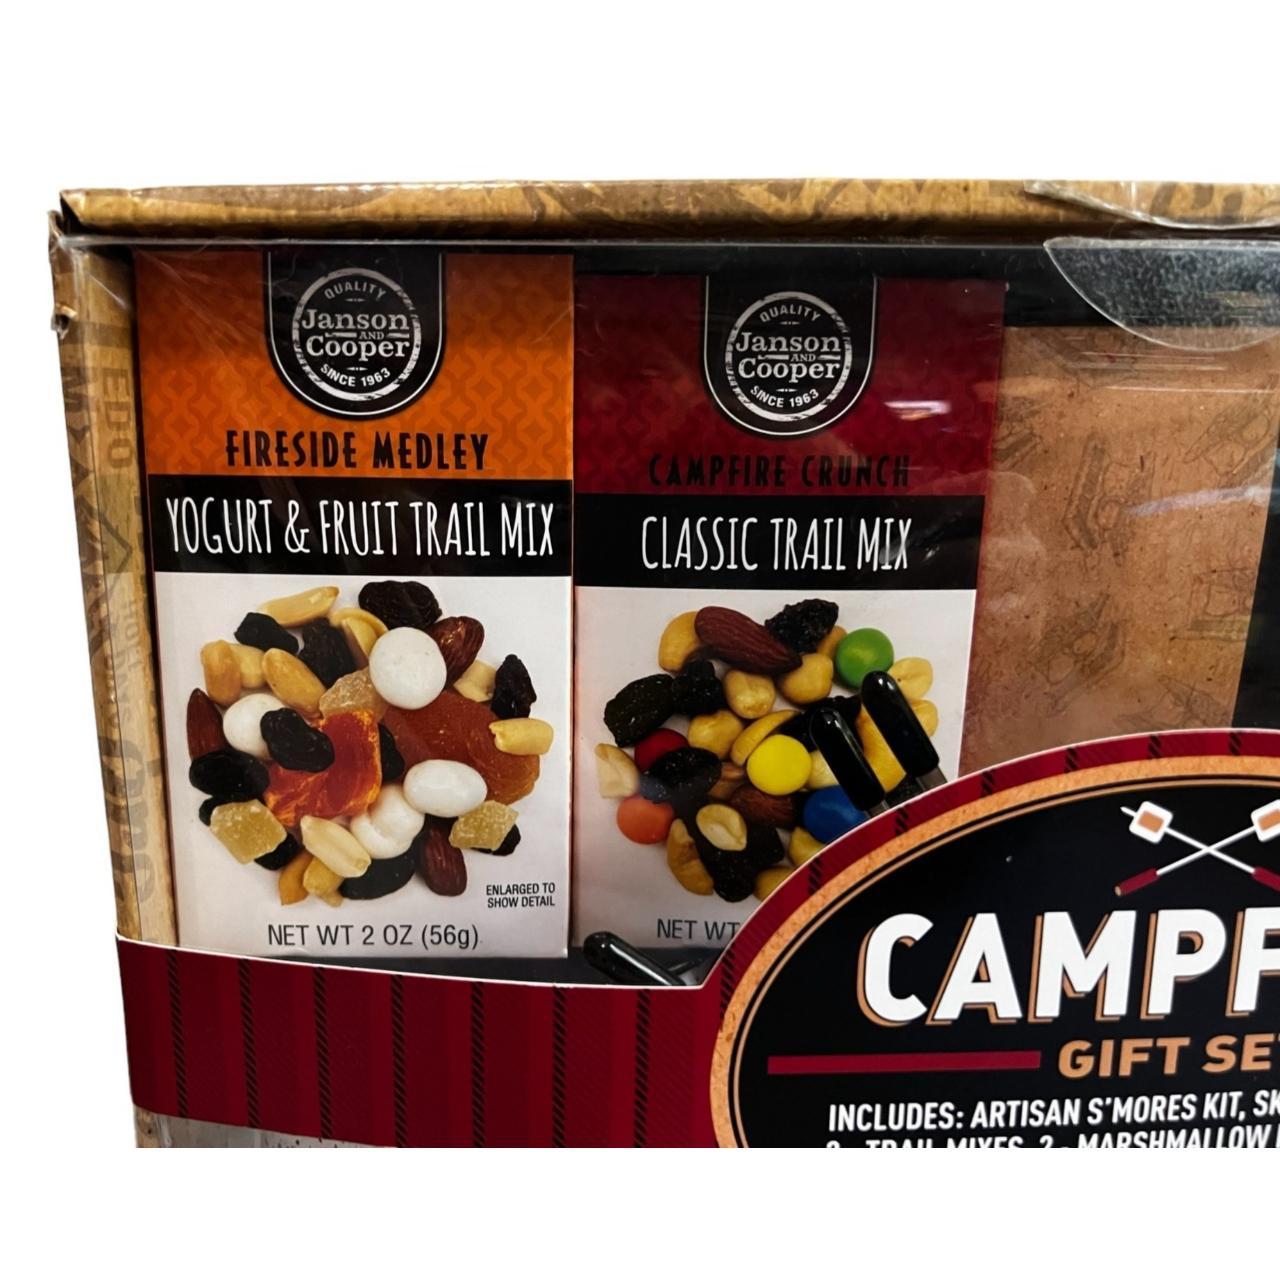 Campfire Gift Set 9 Piece Bundle Artisan Smores Kit, Skillet Cookie Mi –  The MayFlower Market